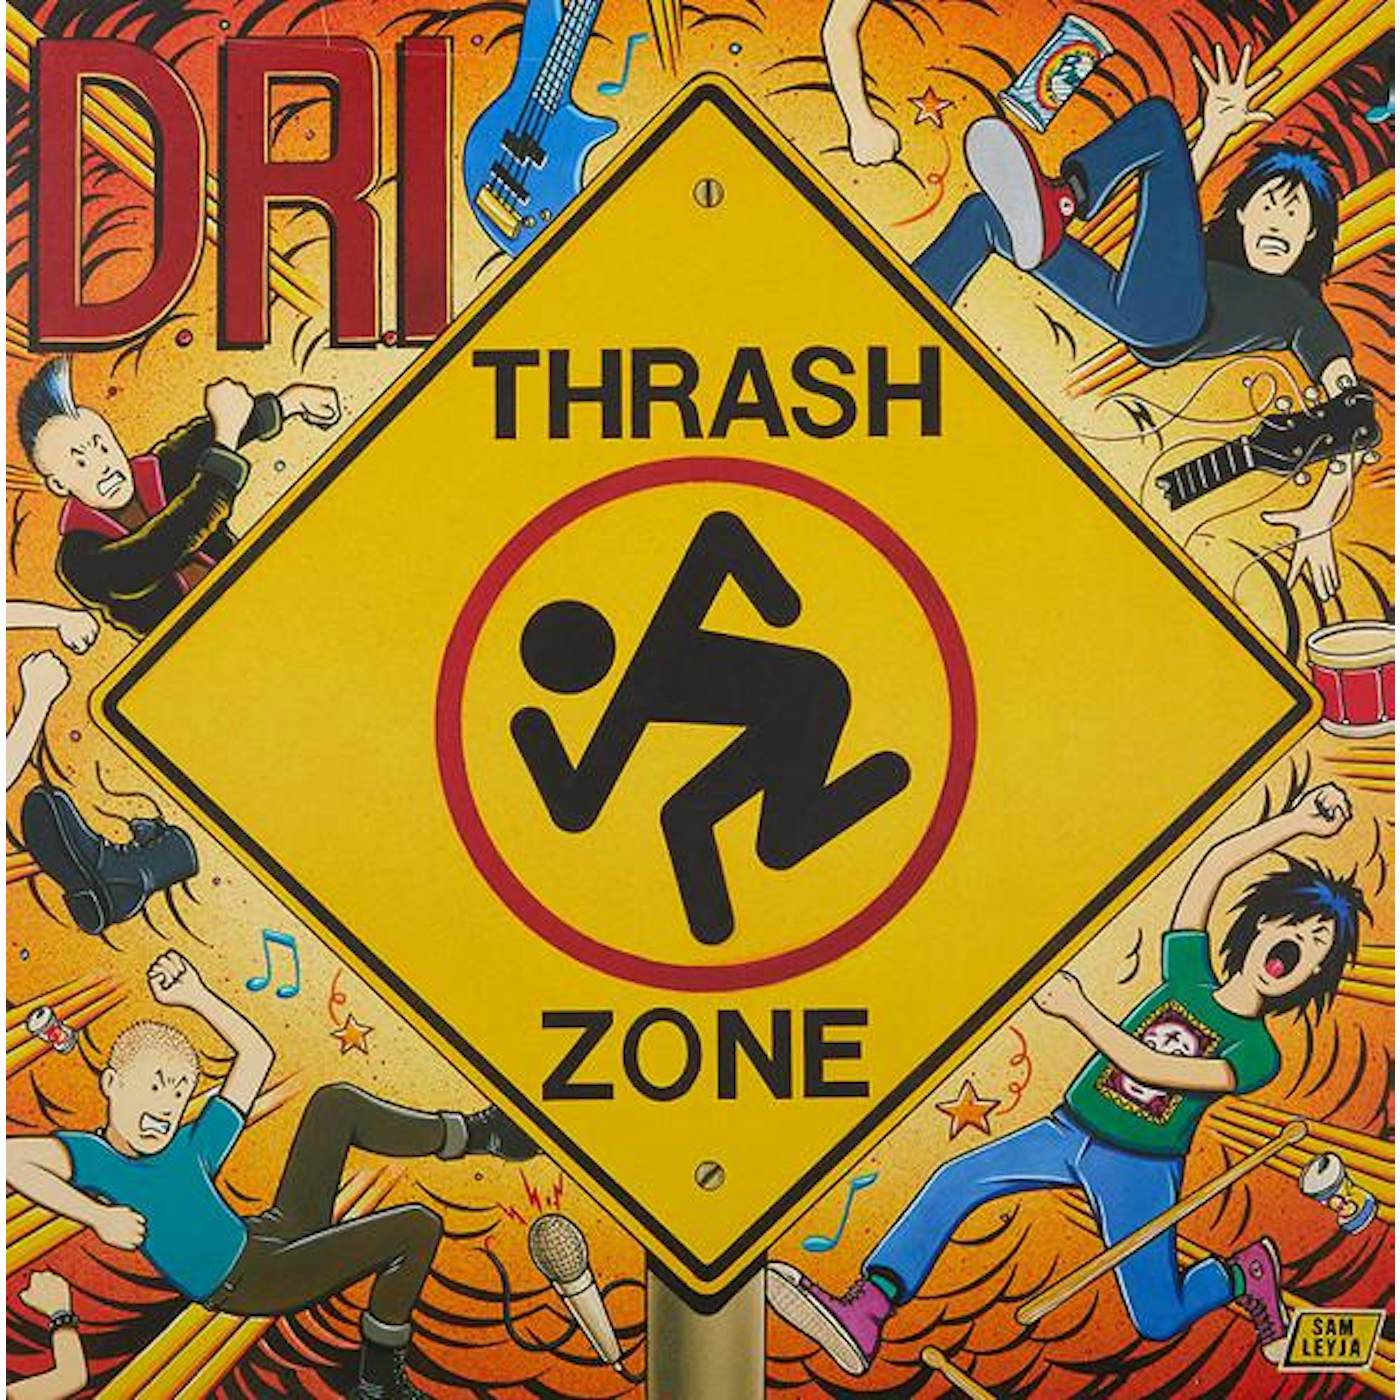 D.R.I. THRASH ZONE CD